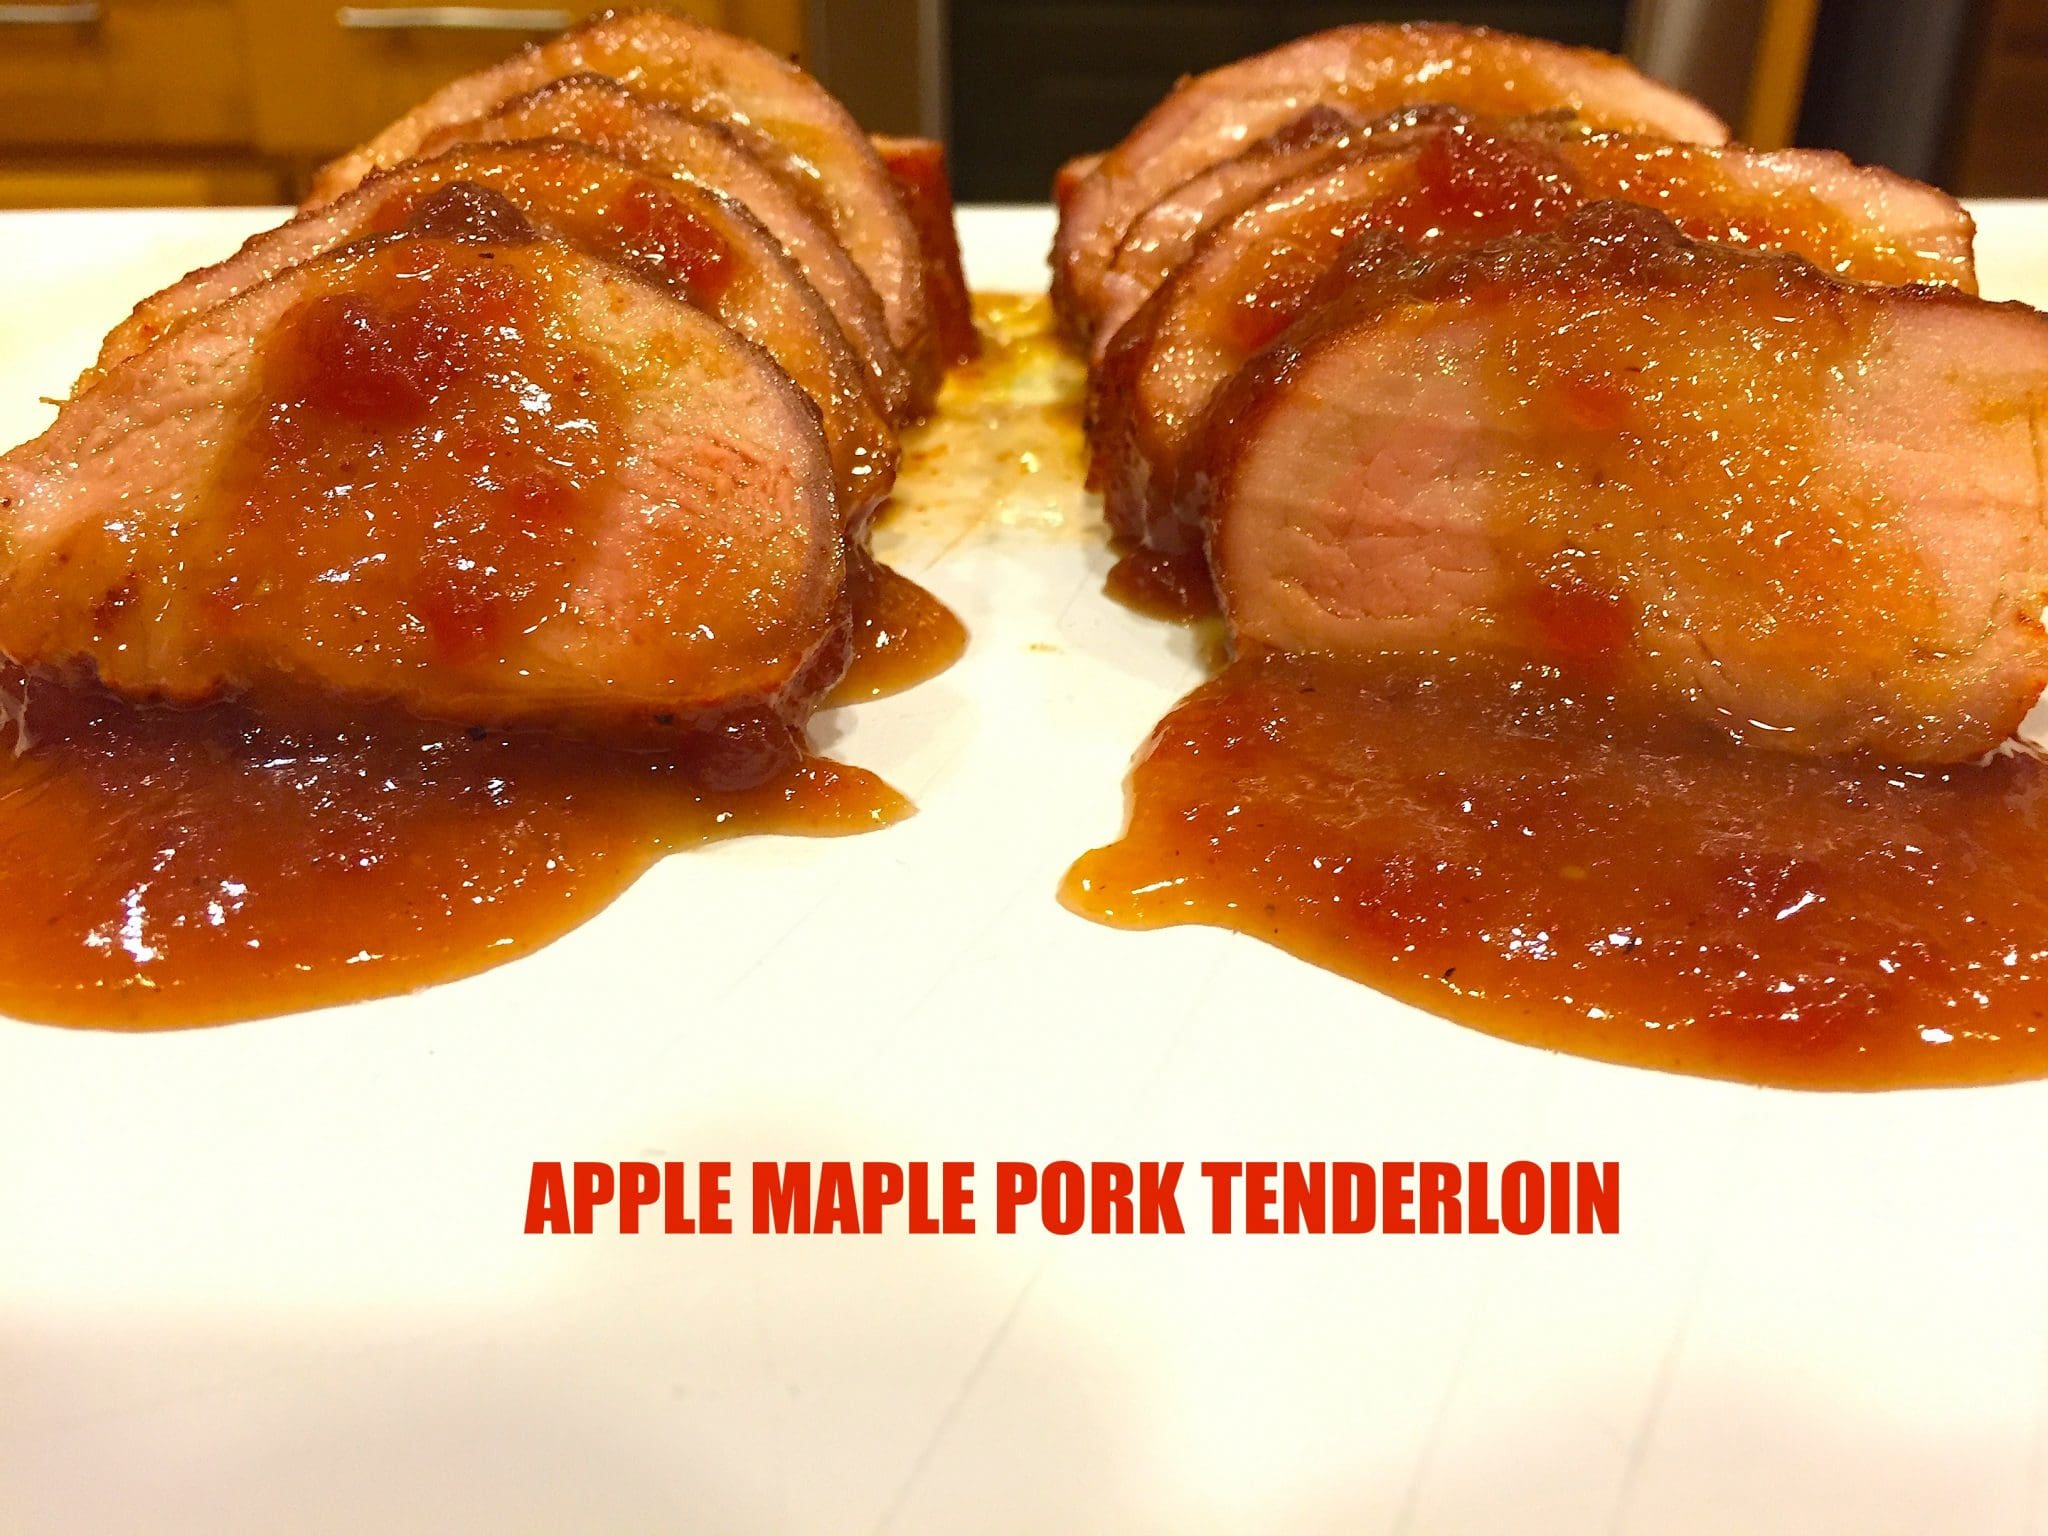 Apple Maple Pork Tenderloin Recipe